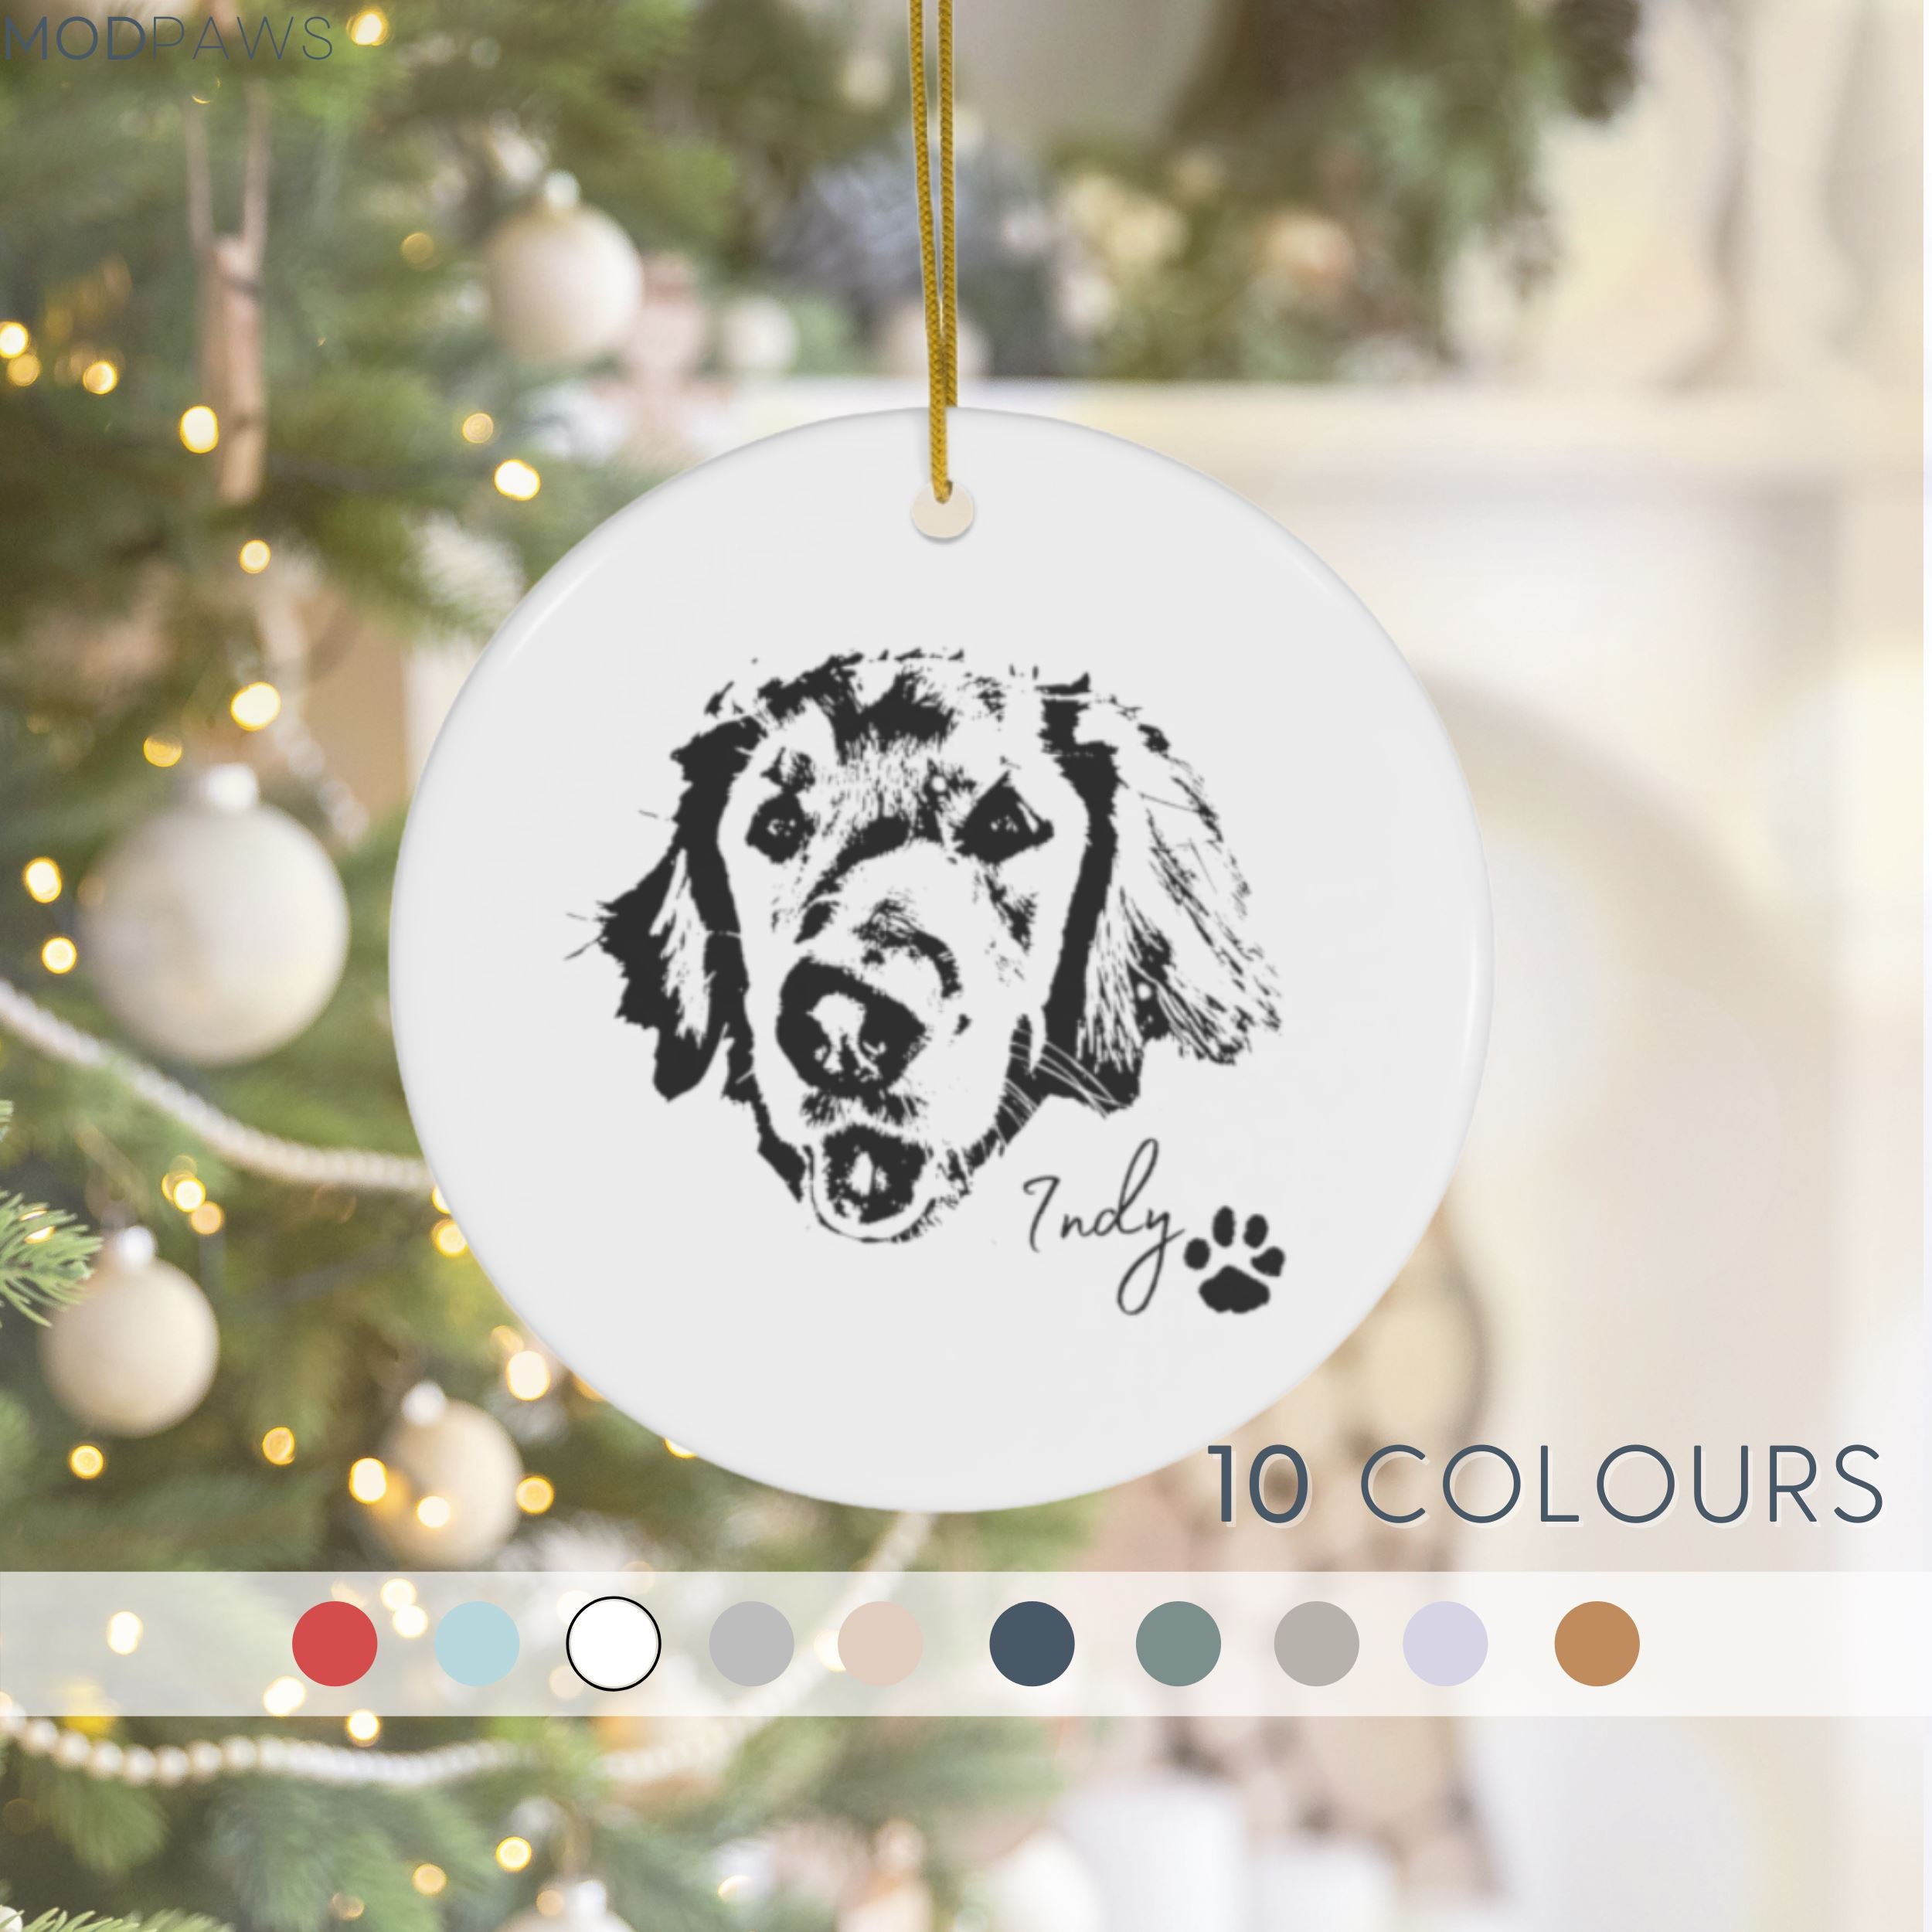  Custom Poodle 3 Dog Ornaments, Custom Dog Ornaments for Pet  Lovers, Gifts for Lovers Dog Ornament, Dog Tree Decor, Christmas Decoration  for Dogs : Home & Kitchen